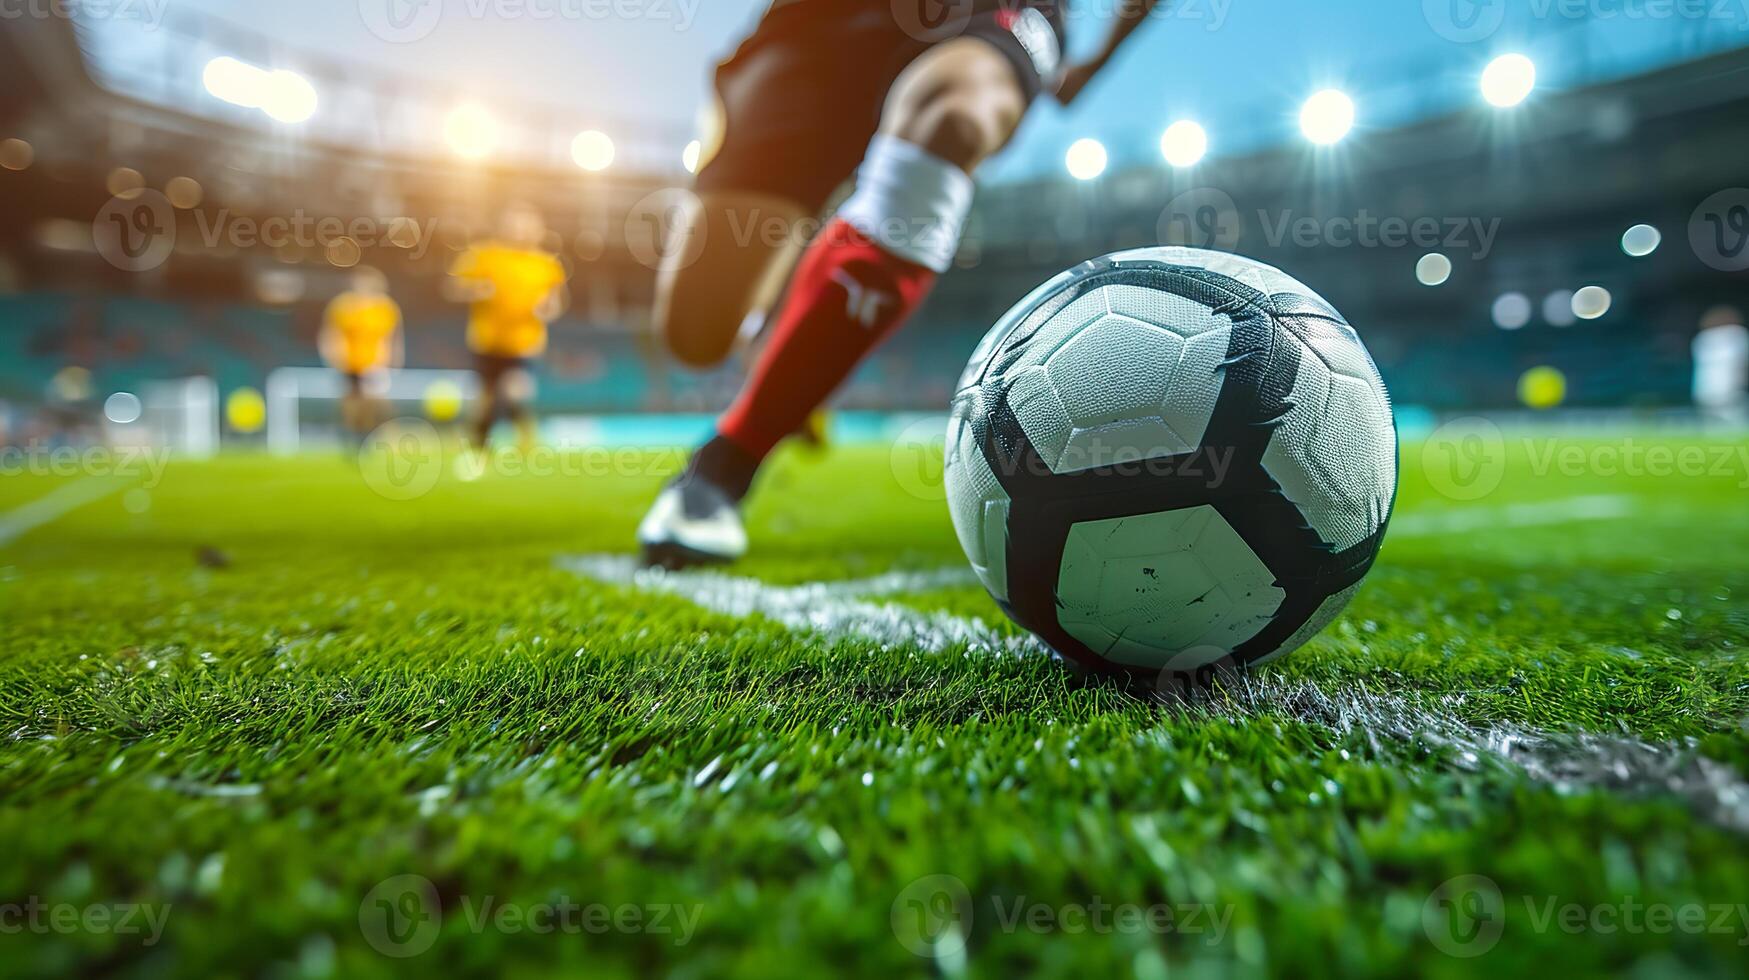 AI generated Soccer Match Intensity, Player Dribbling on Big Stadium Field photo